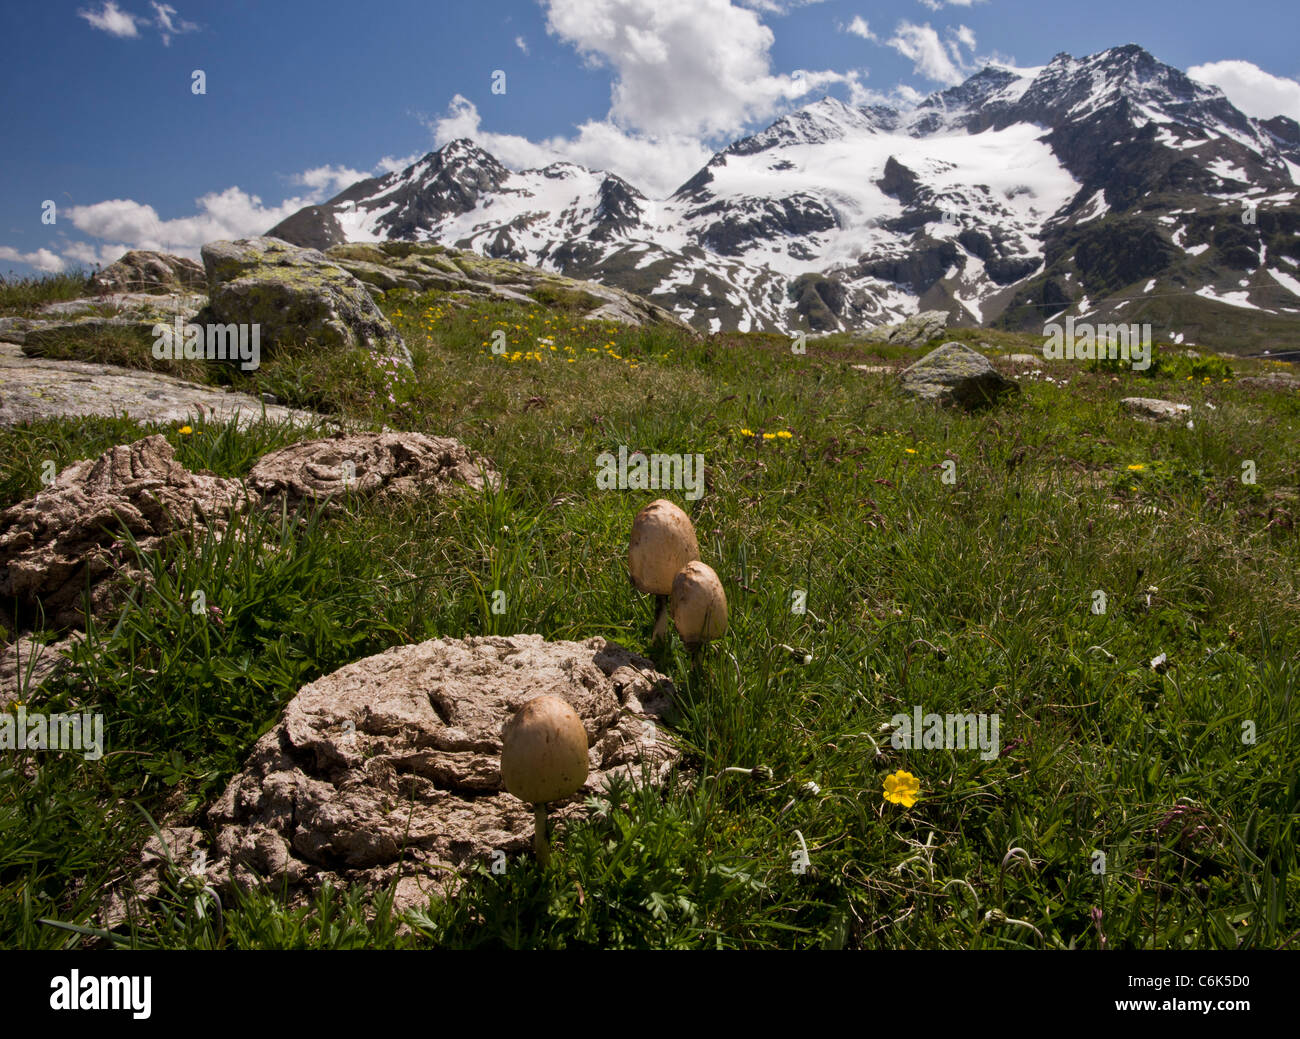 Panaeolus Semiovatus, Eierkopf Mottlegill auf Kuhdung in großer Höhe, Berninapass, Schweizer Alpen. Stockfoto